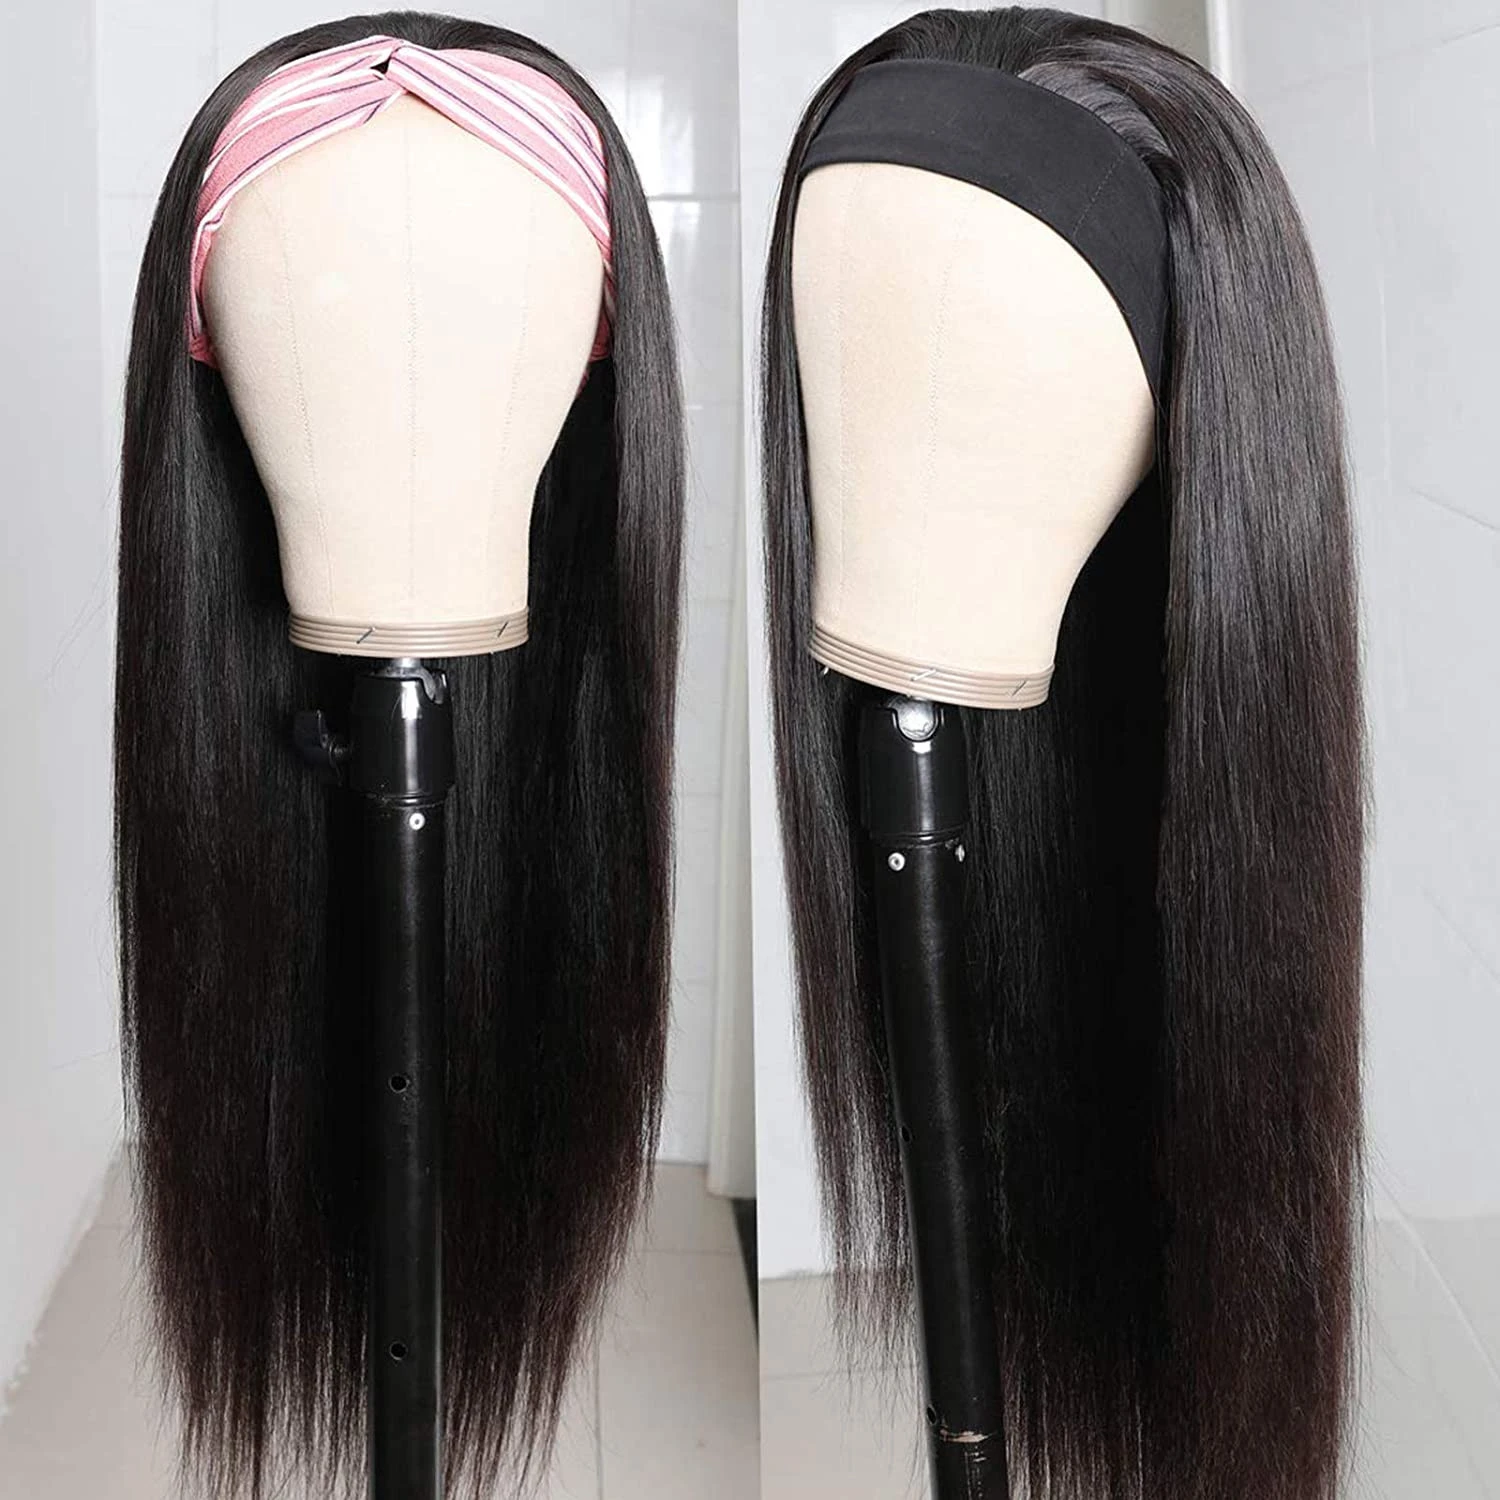 Wholesale Headband Wig Human Hair For Black Women,Remy Human Hair Headband Wig,Headband Kinky Ponytail Human Hair Wig